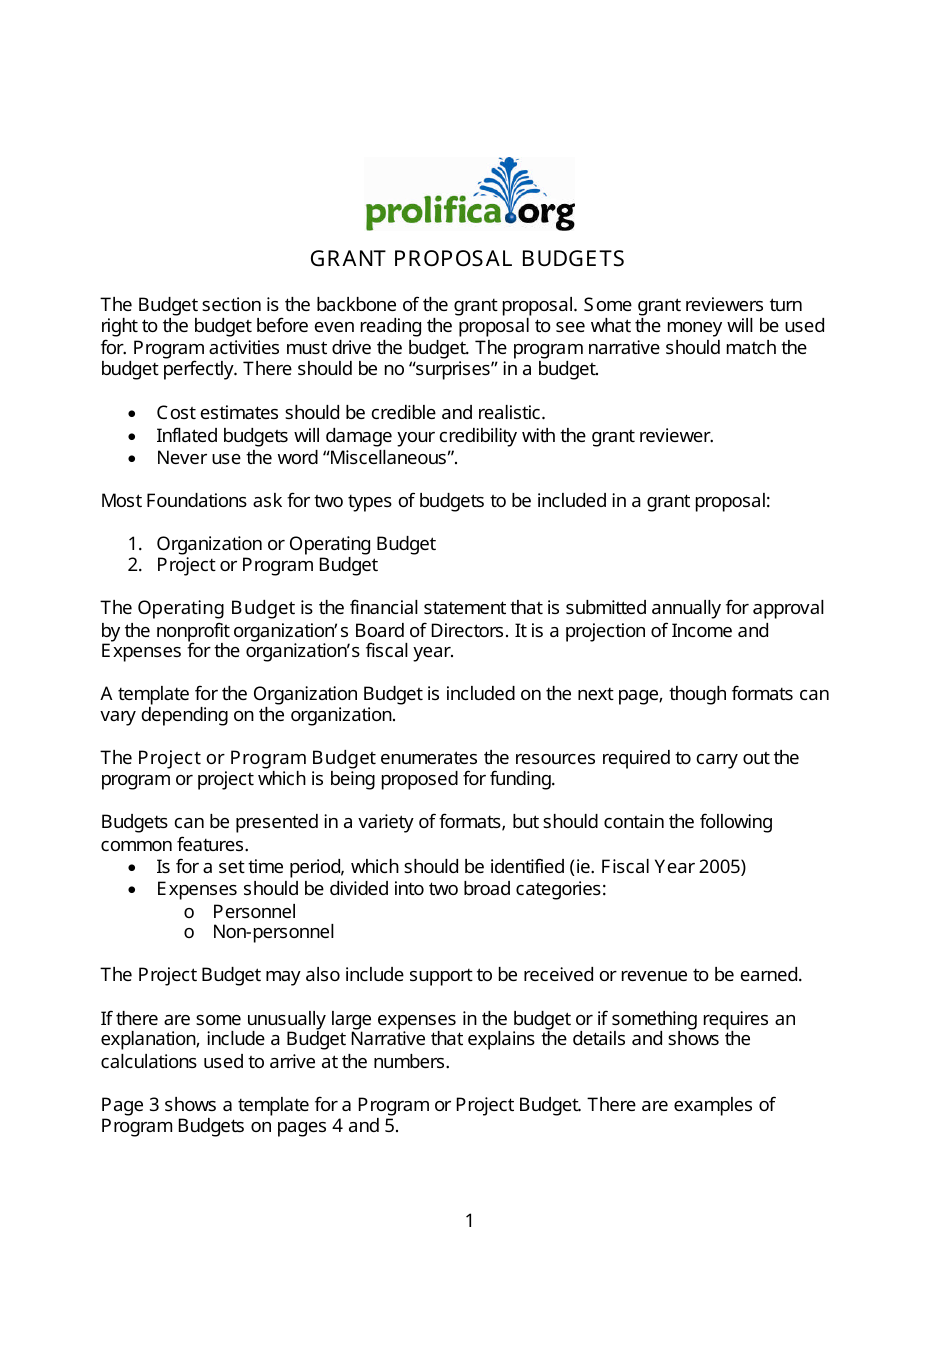 Grant Proposal Budget Template - Prolifica Download Printable PDF For Grant Proposal Budget Template